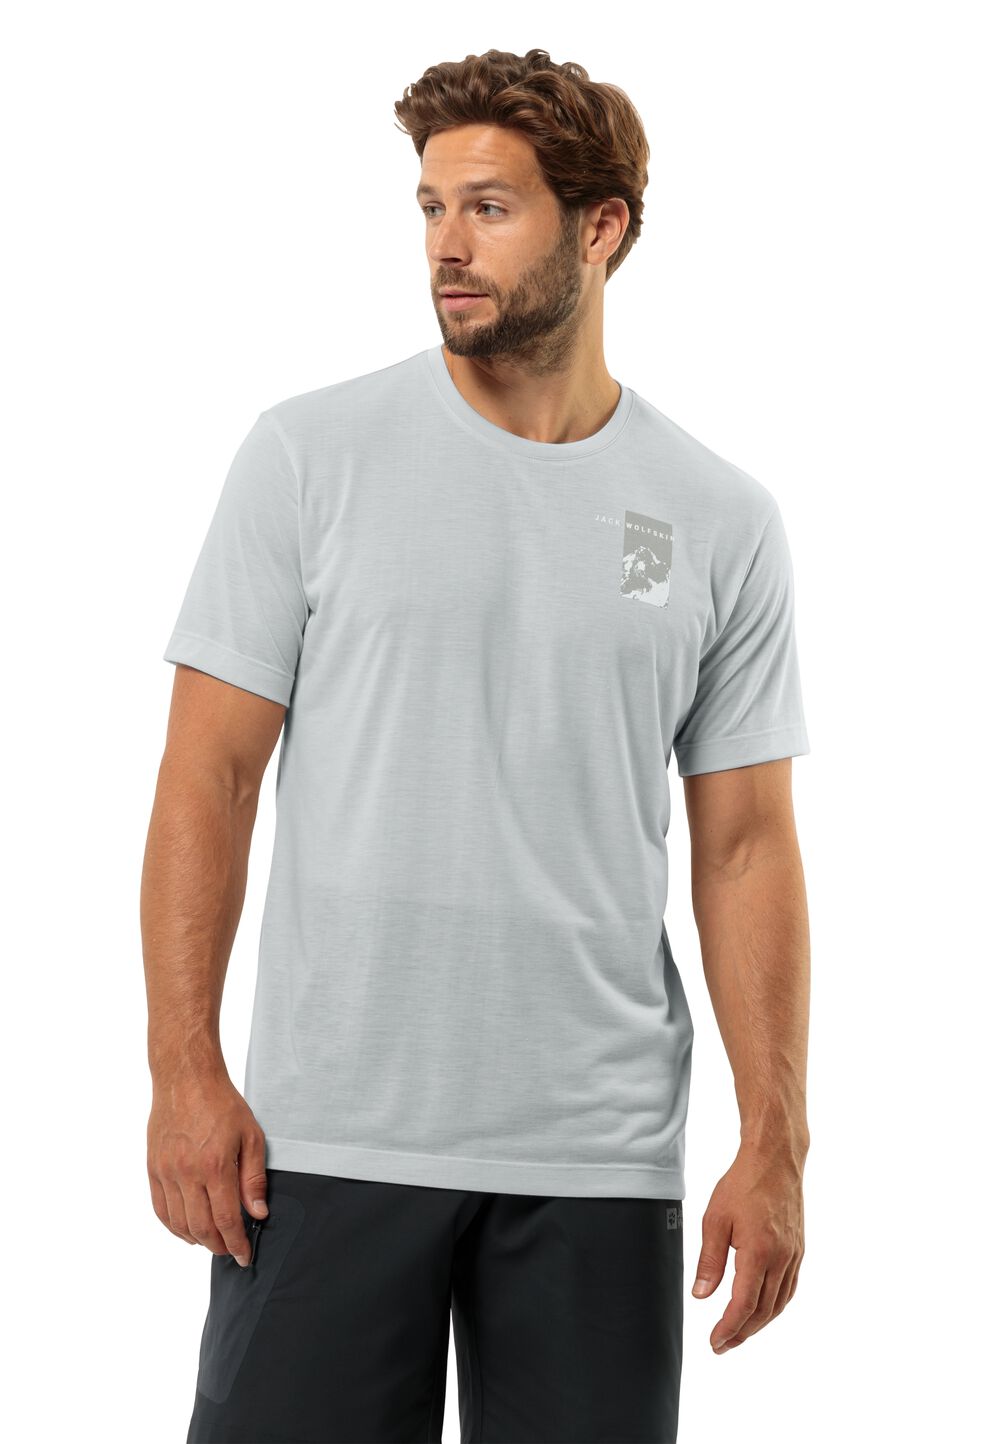 Jack Wolfskin Vonnan S S Graphic T-Shirt Men Functioneel shirt Heren L grijs cool grey